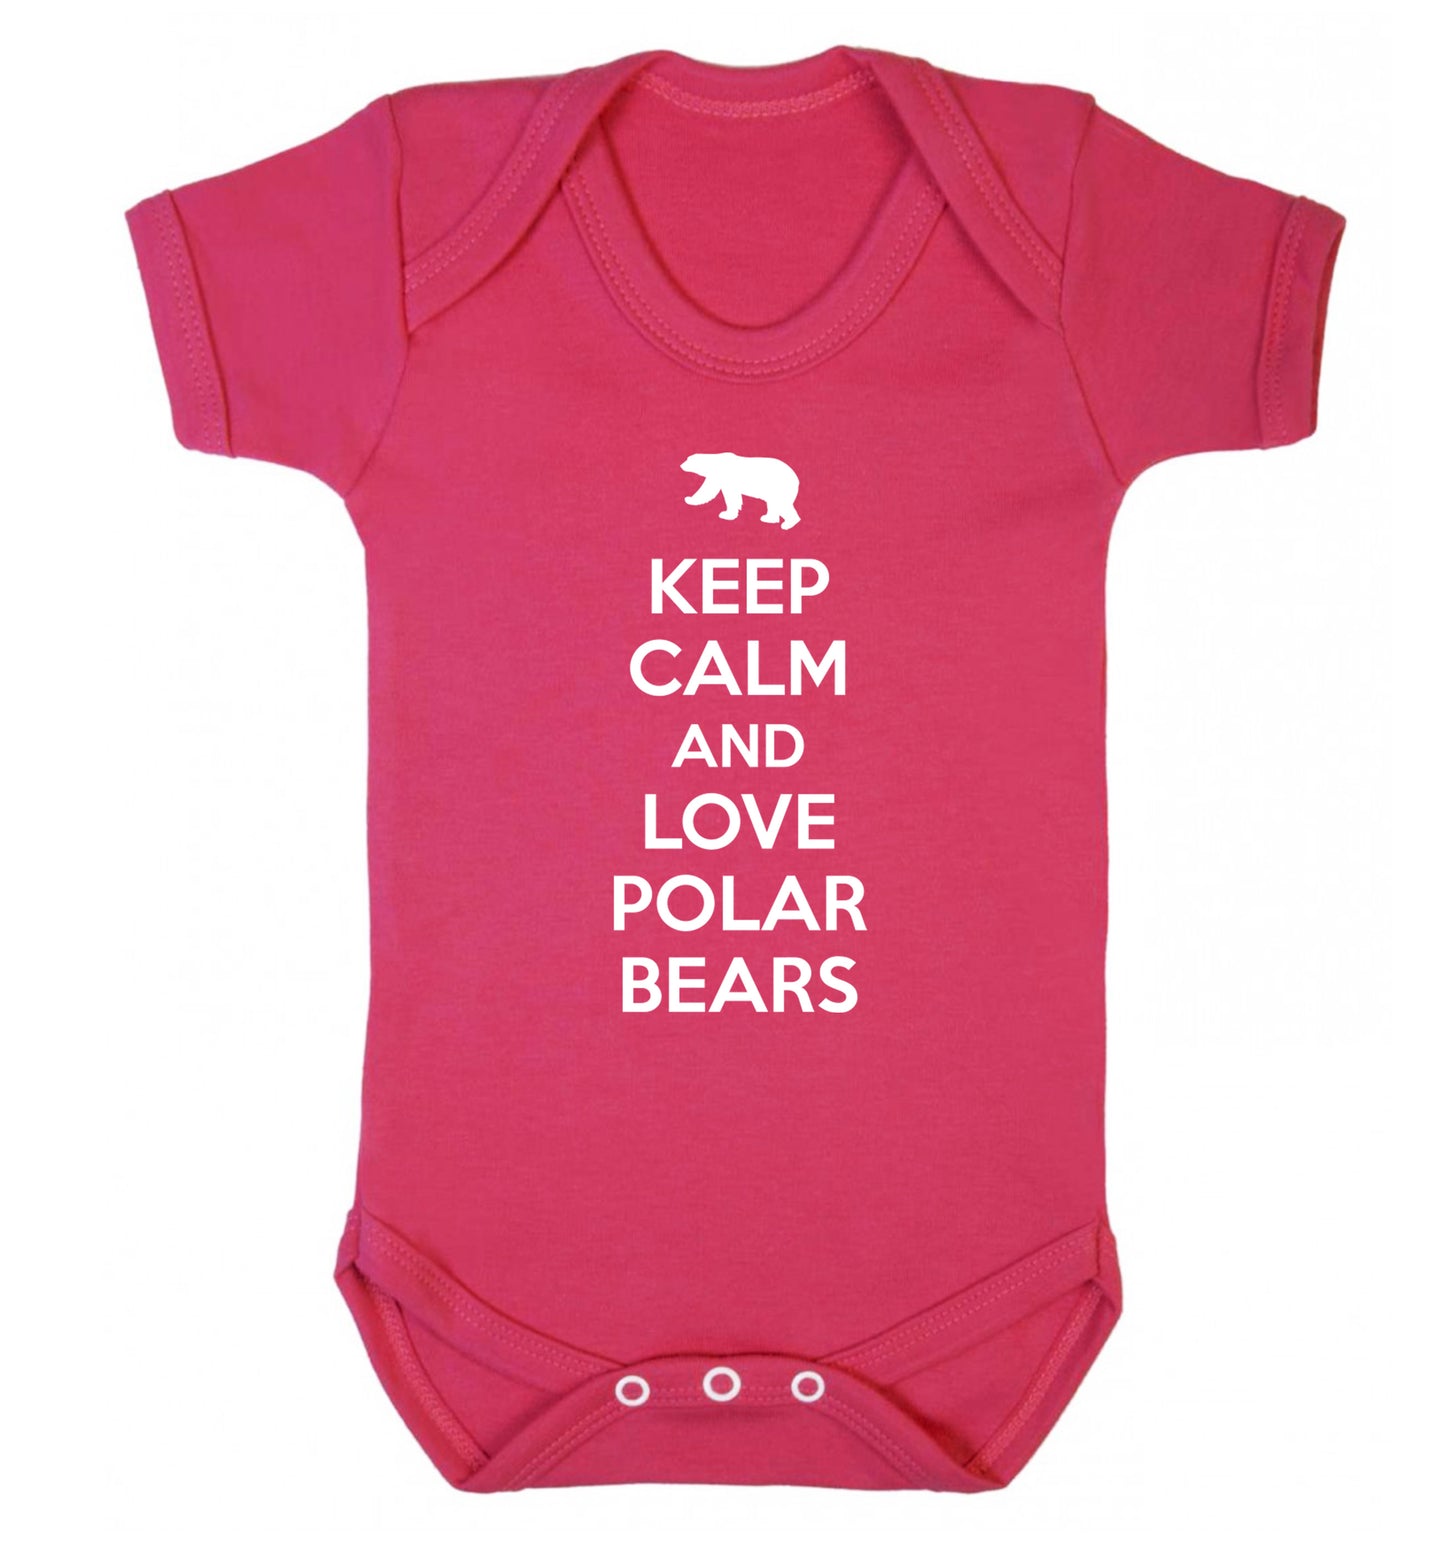 Keep calm and love polar bears Baby Vest dark pink 18-24 months